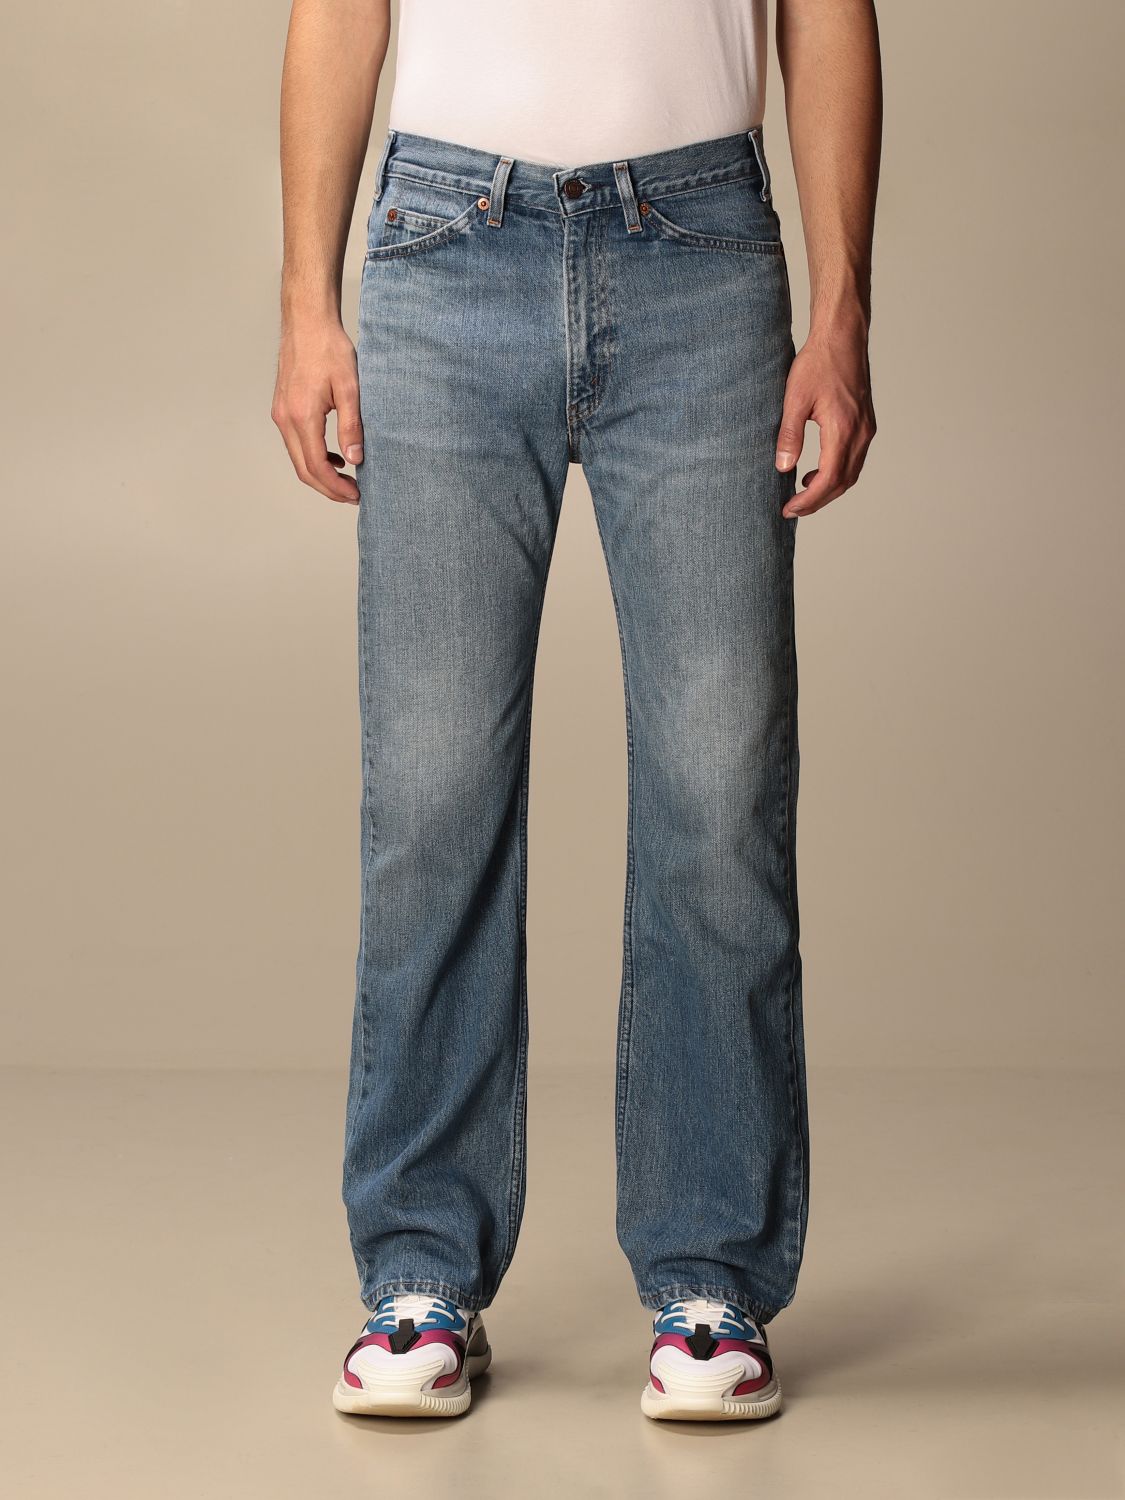 VALENTINO: Levi's x 1969 re-edition jeans - Denim | Valentino jeans VV0DD01G online on GIGLIO.COM